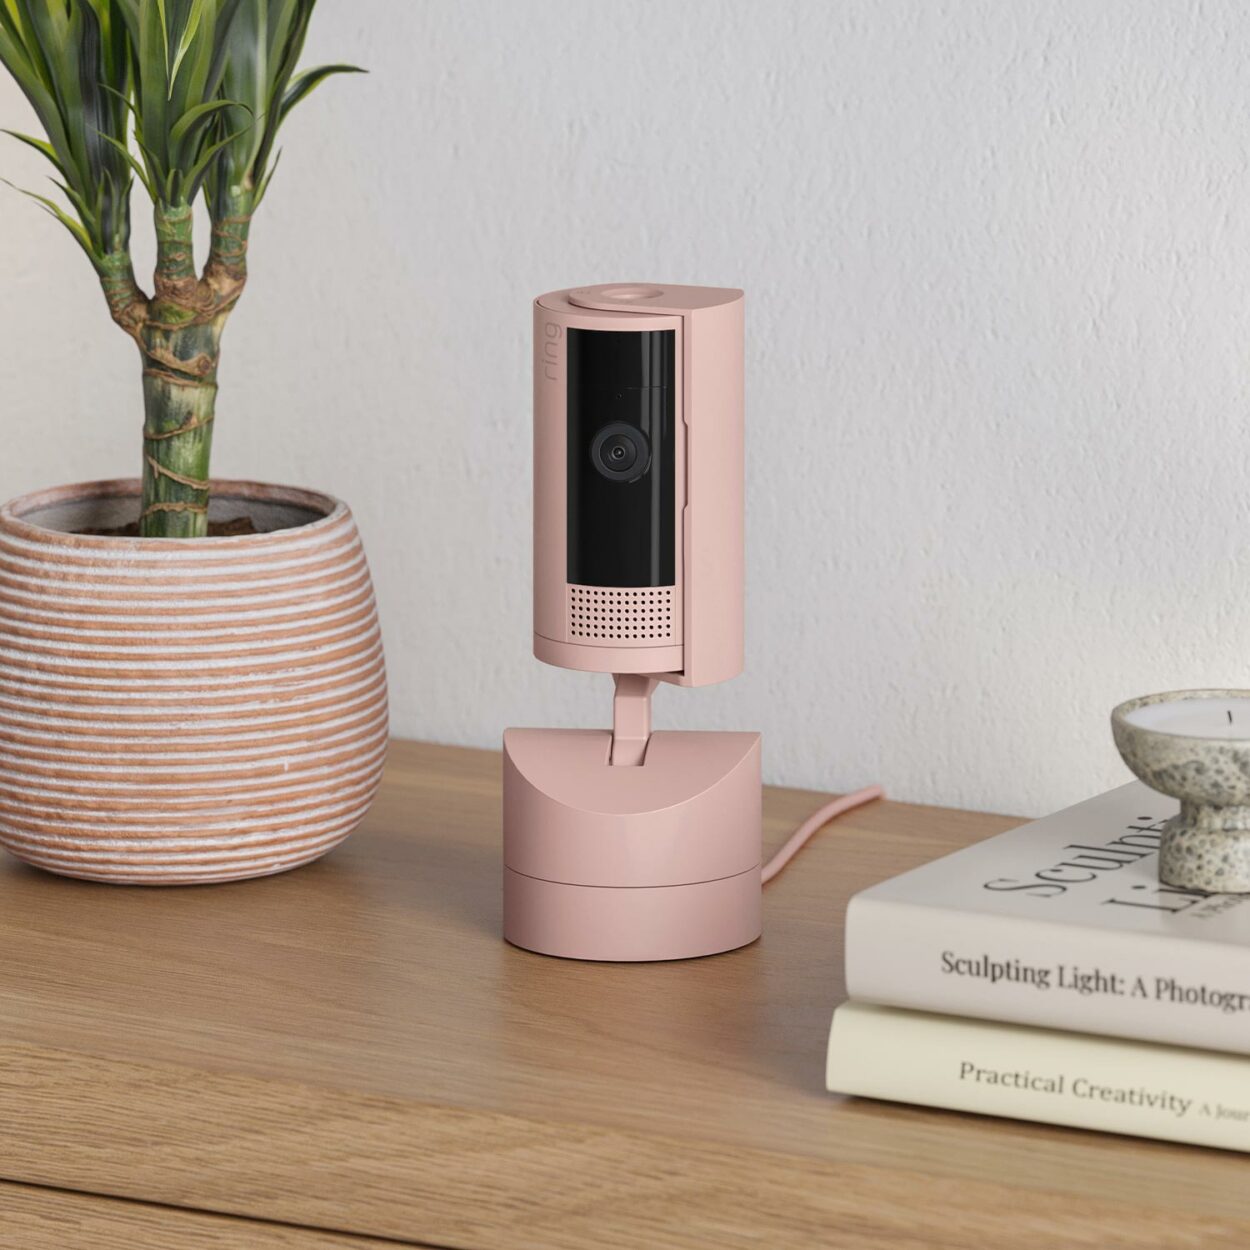 Ring Pan-Tilt Indoor Camera in pink color